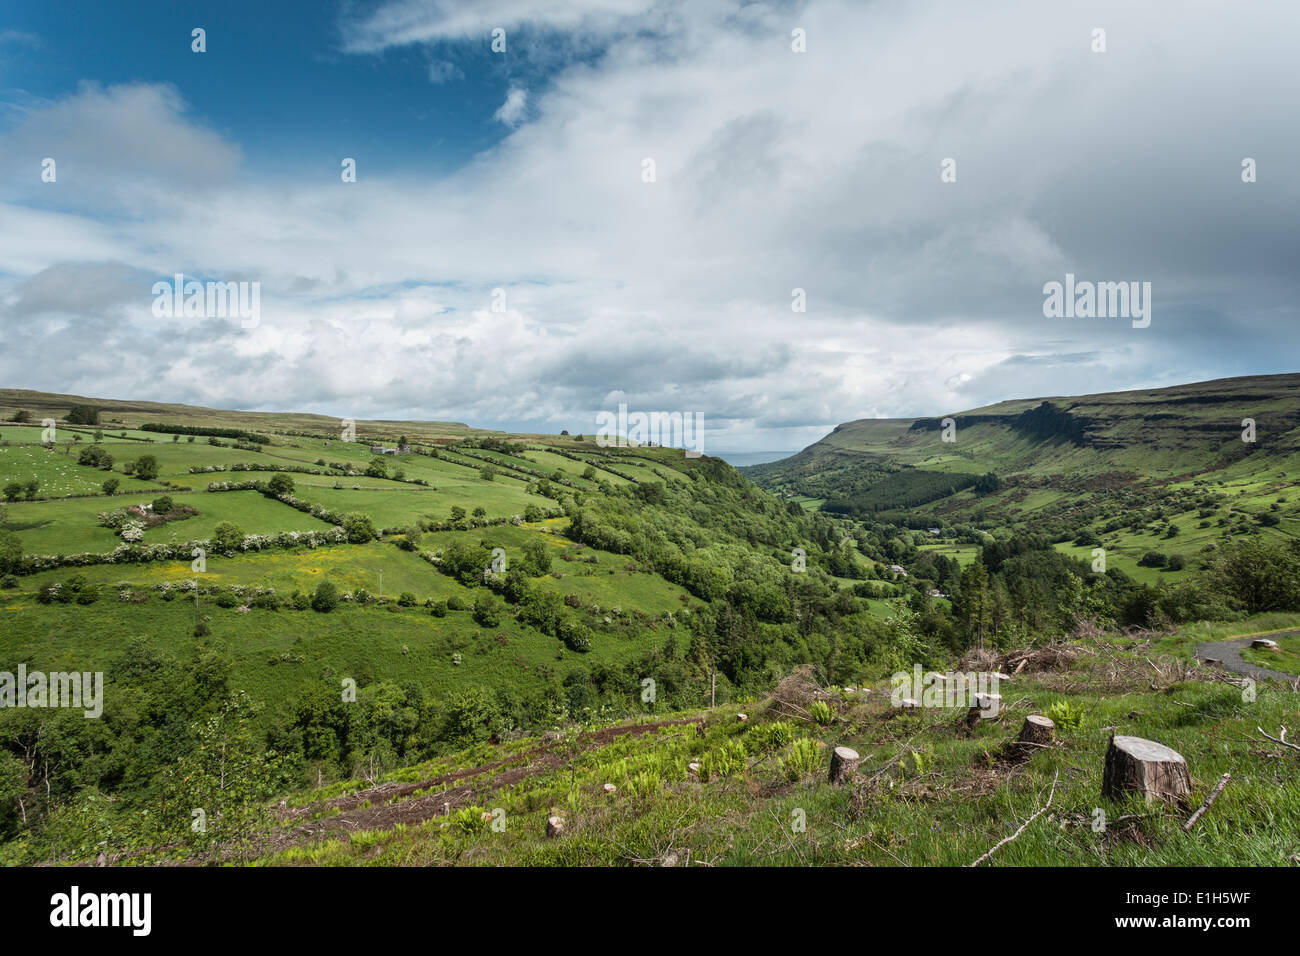 View of tree stumps and fields, Glenariff, County Antrim, Northern Ireland, UK Stock Photo